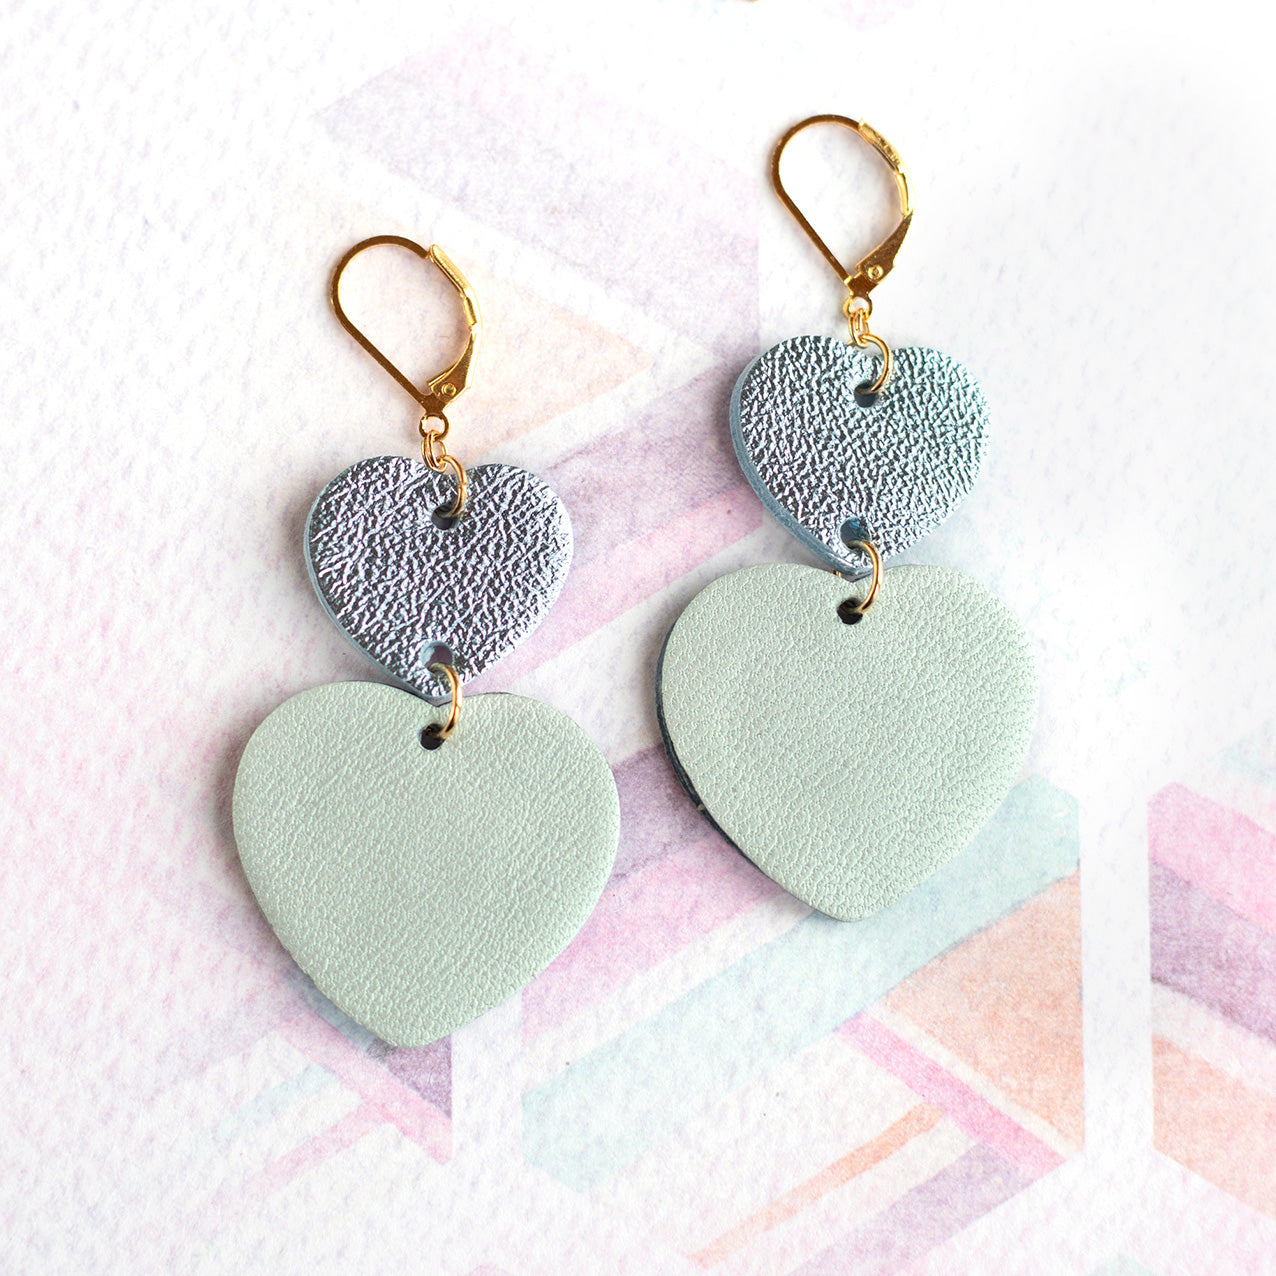 Double Hearts earrings - metallic blue and opaline leather